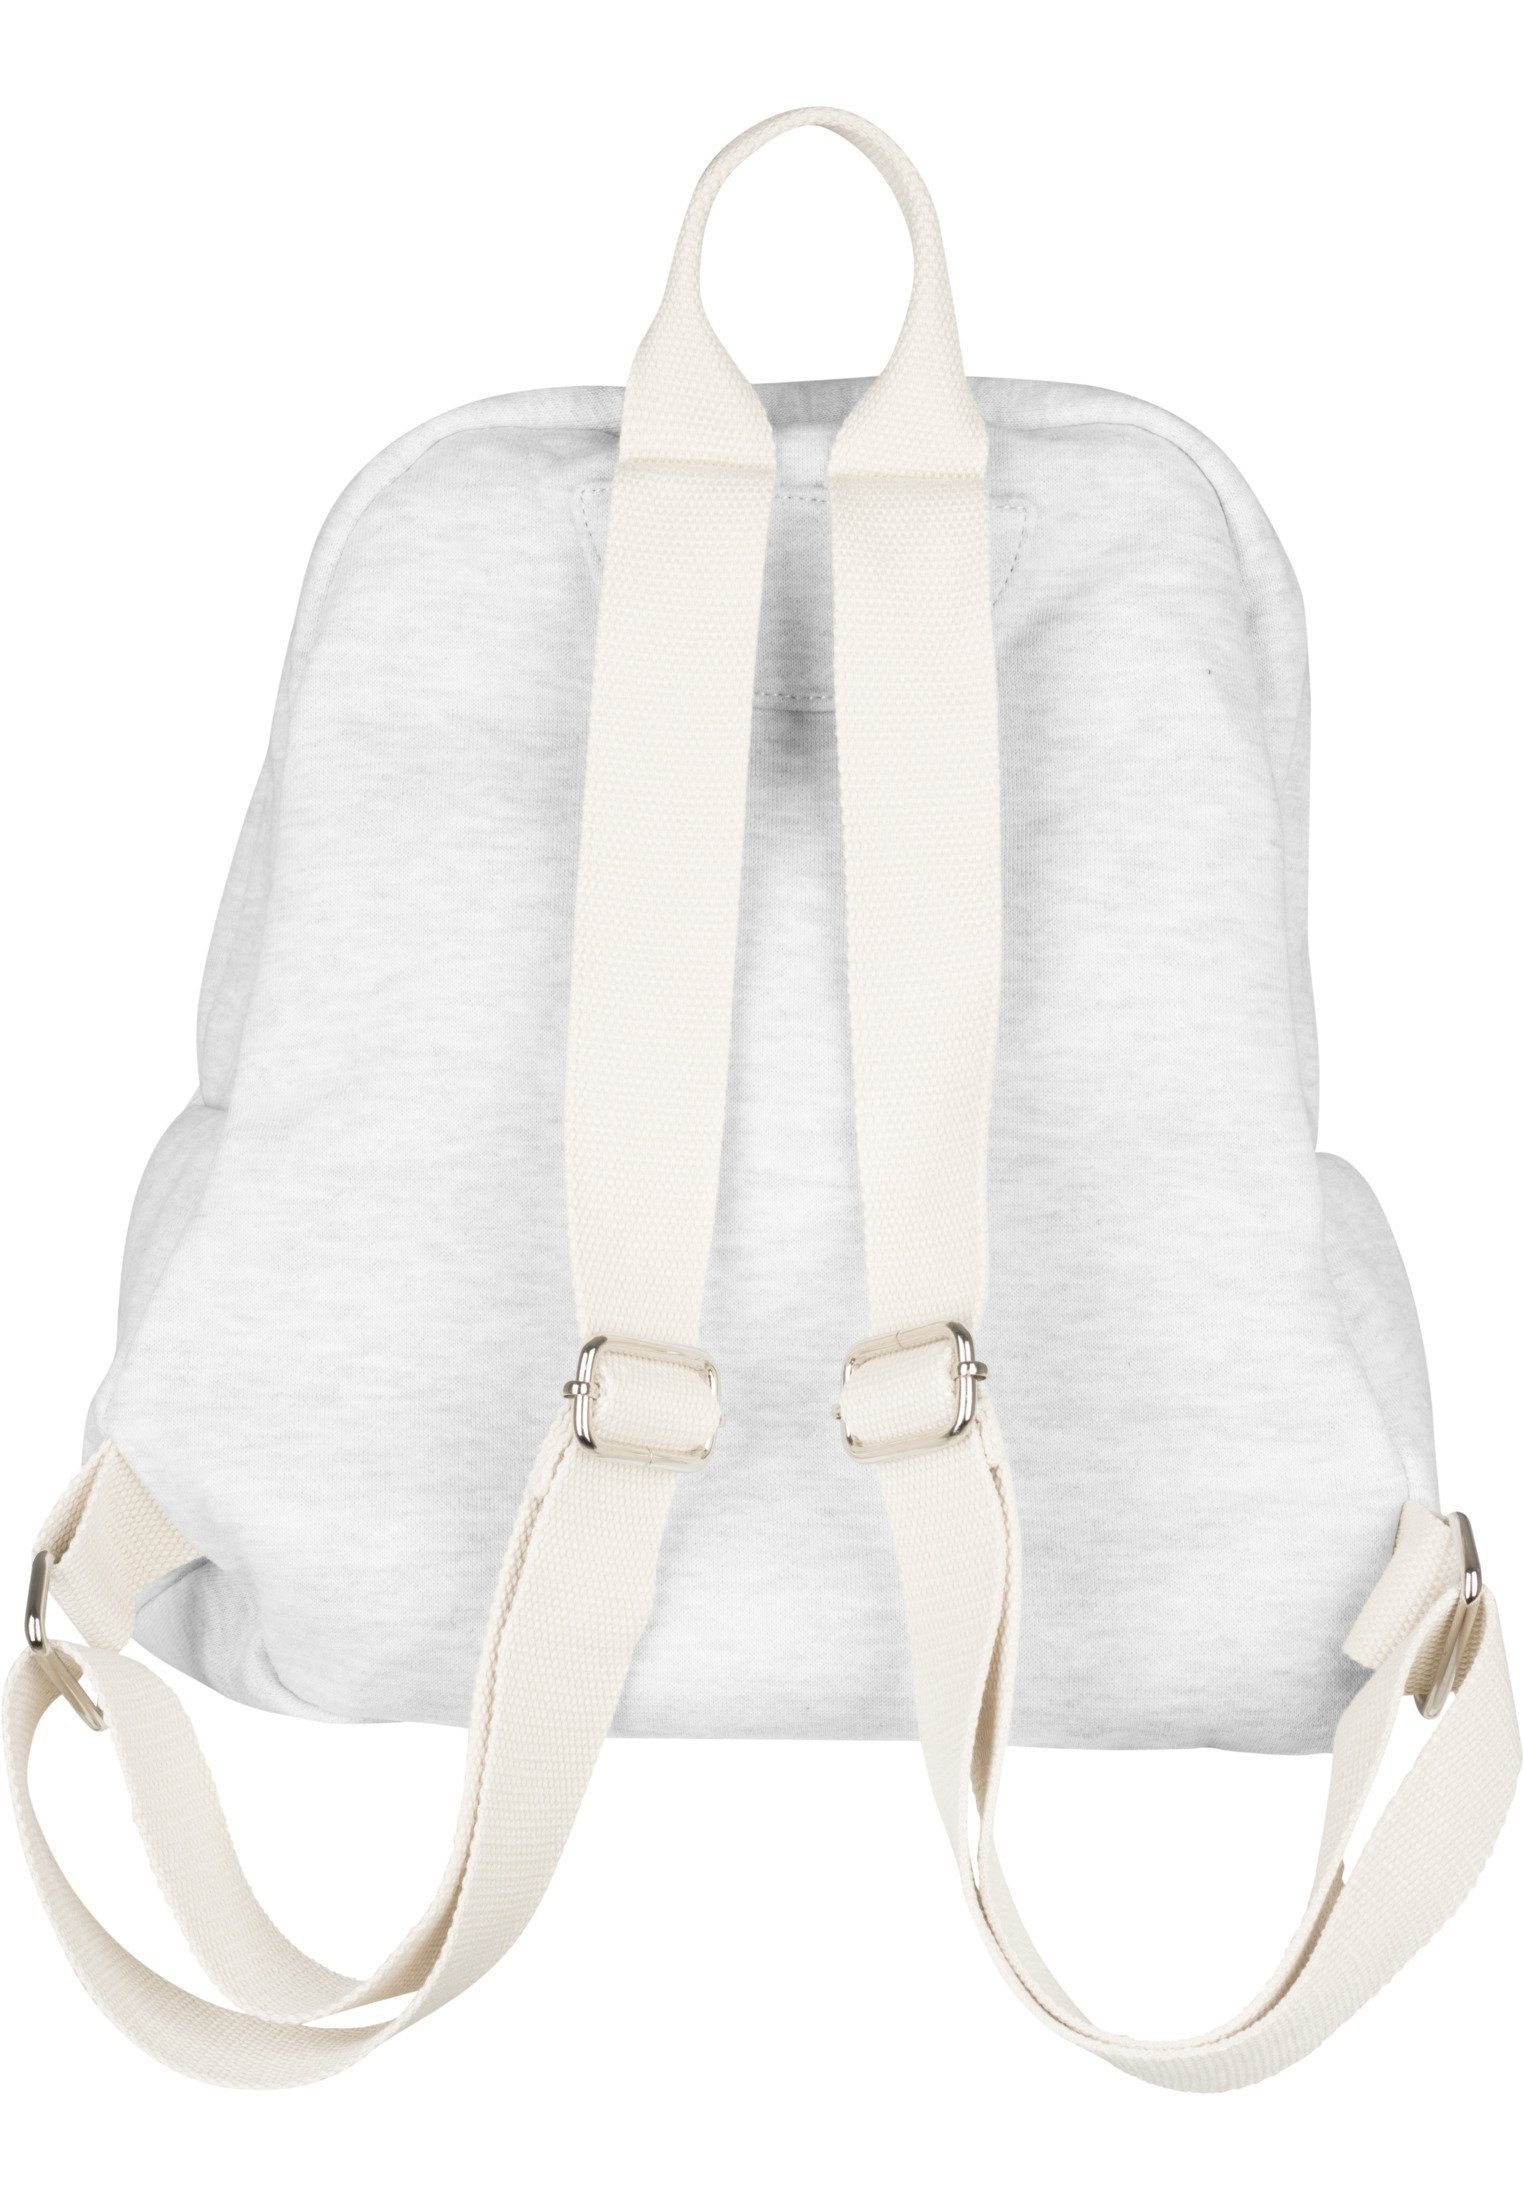 melange/offwhite Unisex URBAN Sweat offwhite Rucksack Backpack CLASSICS